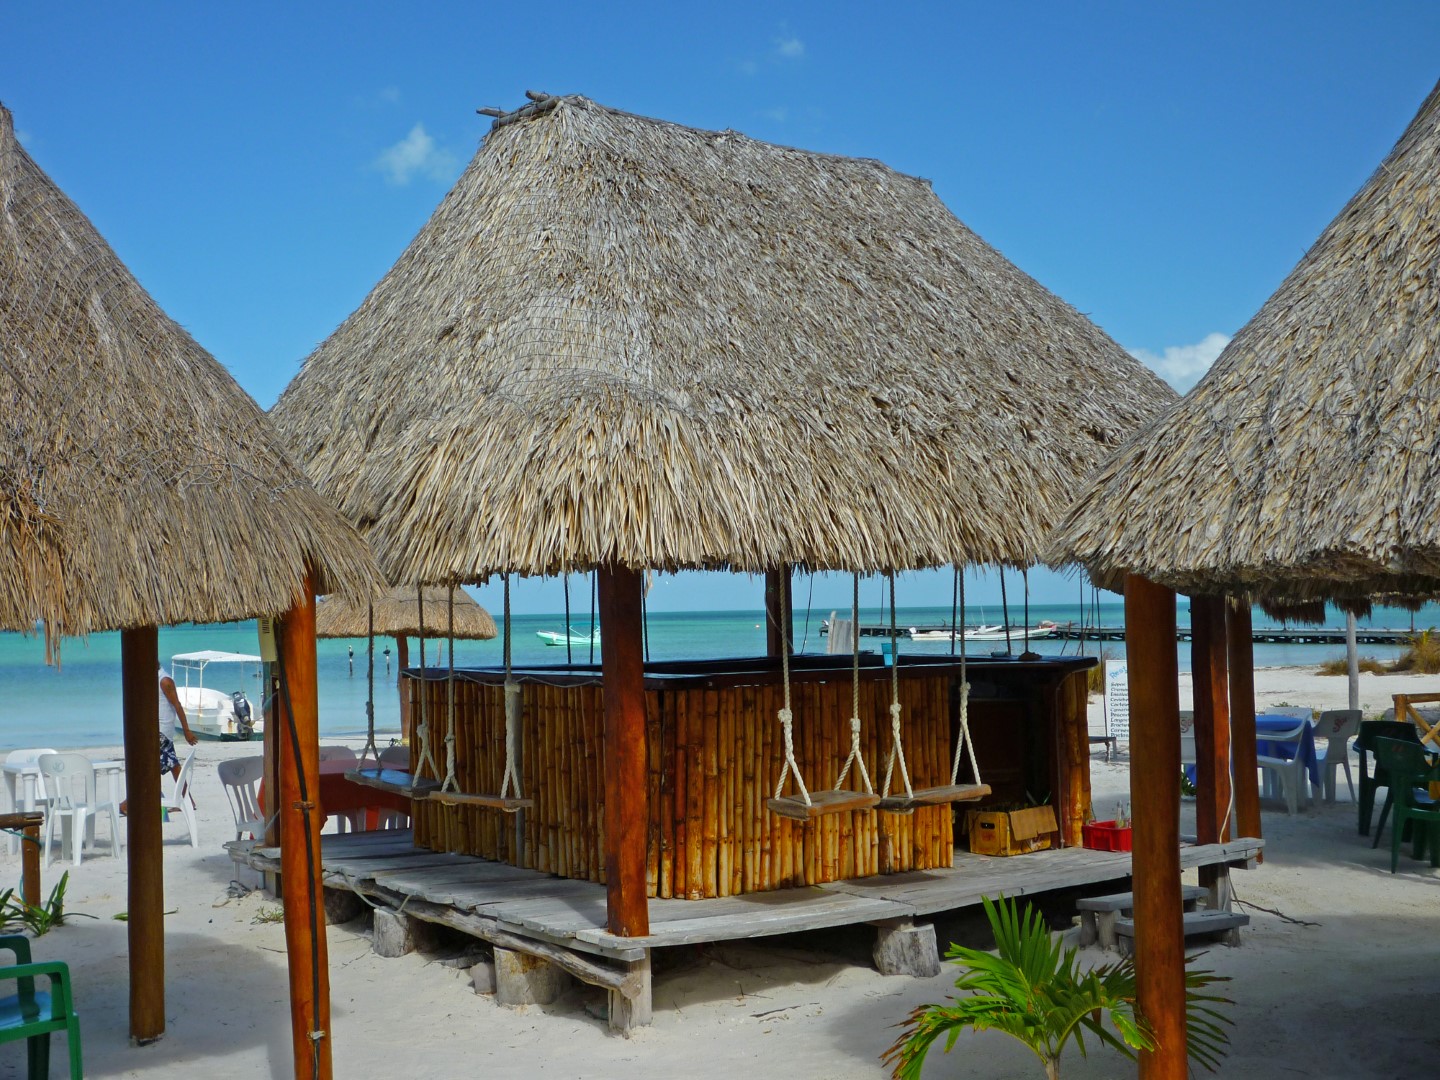 Beach bar with swings on Holbox, Mexico